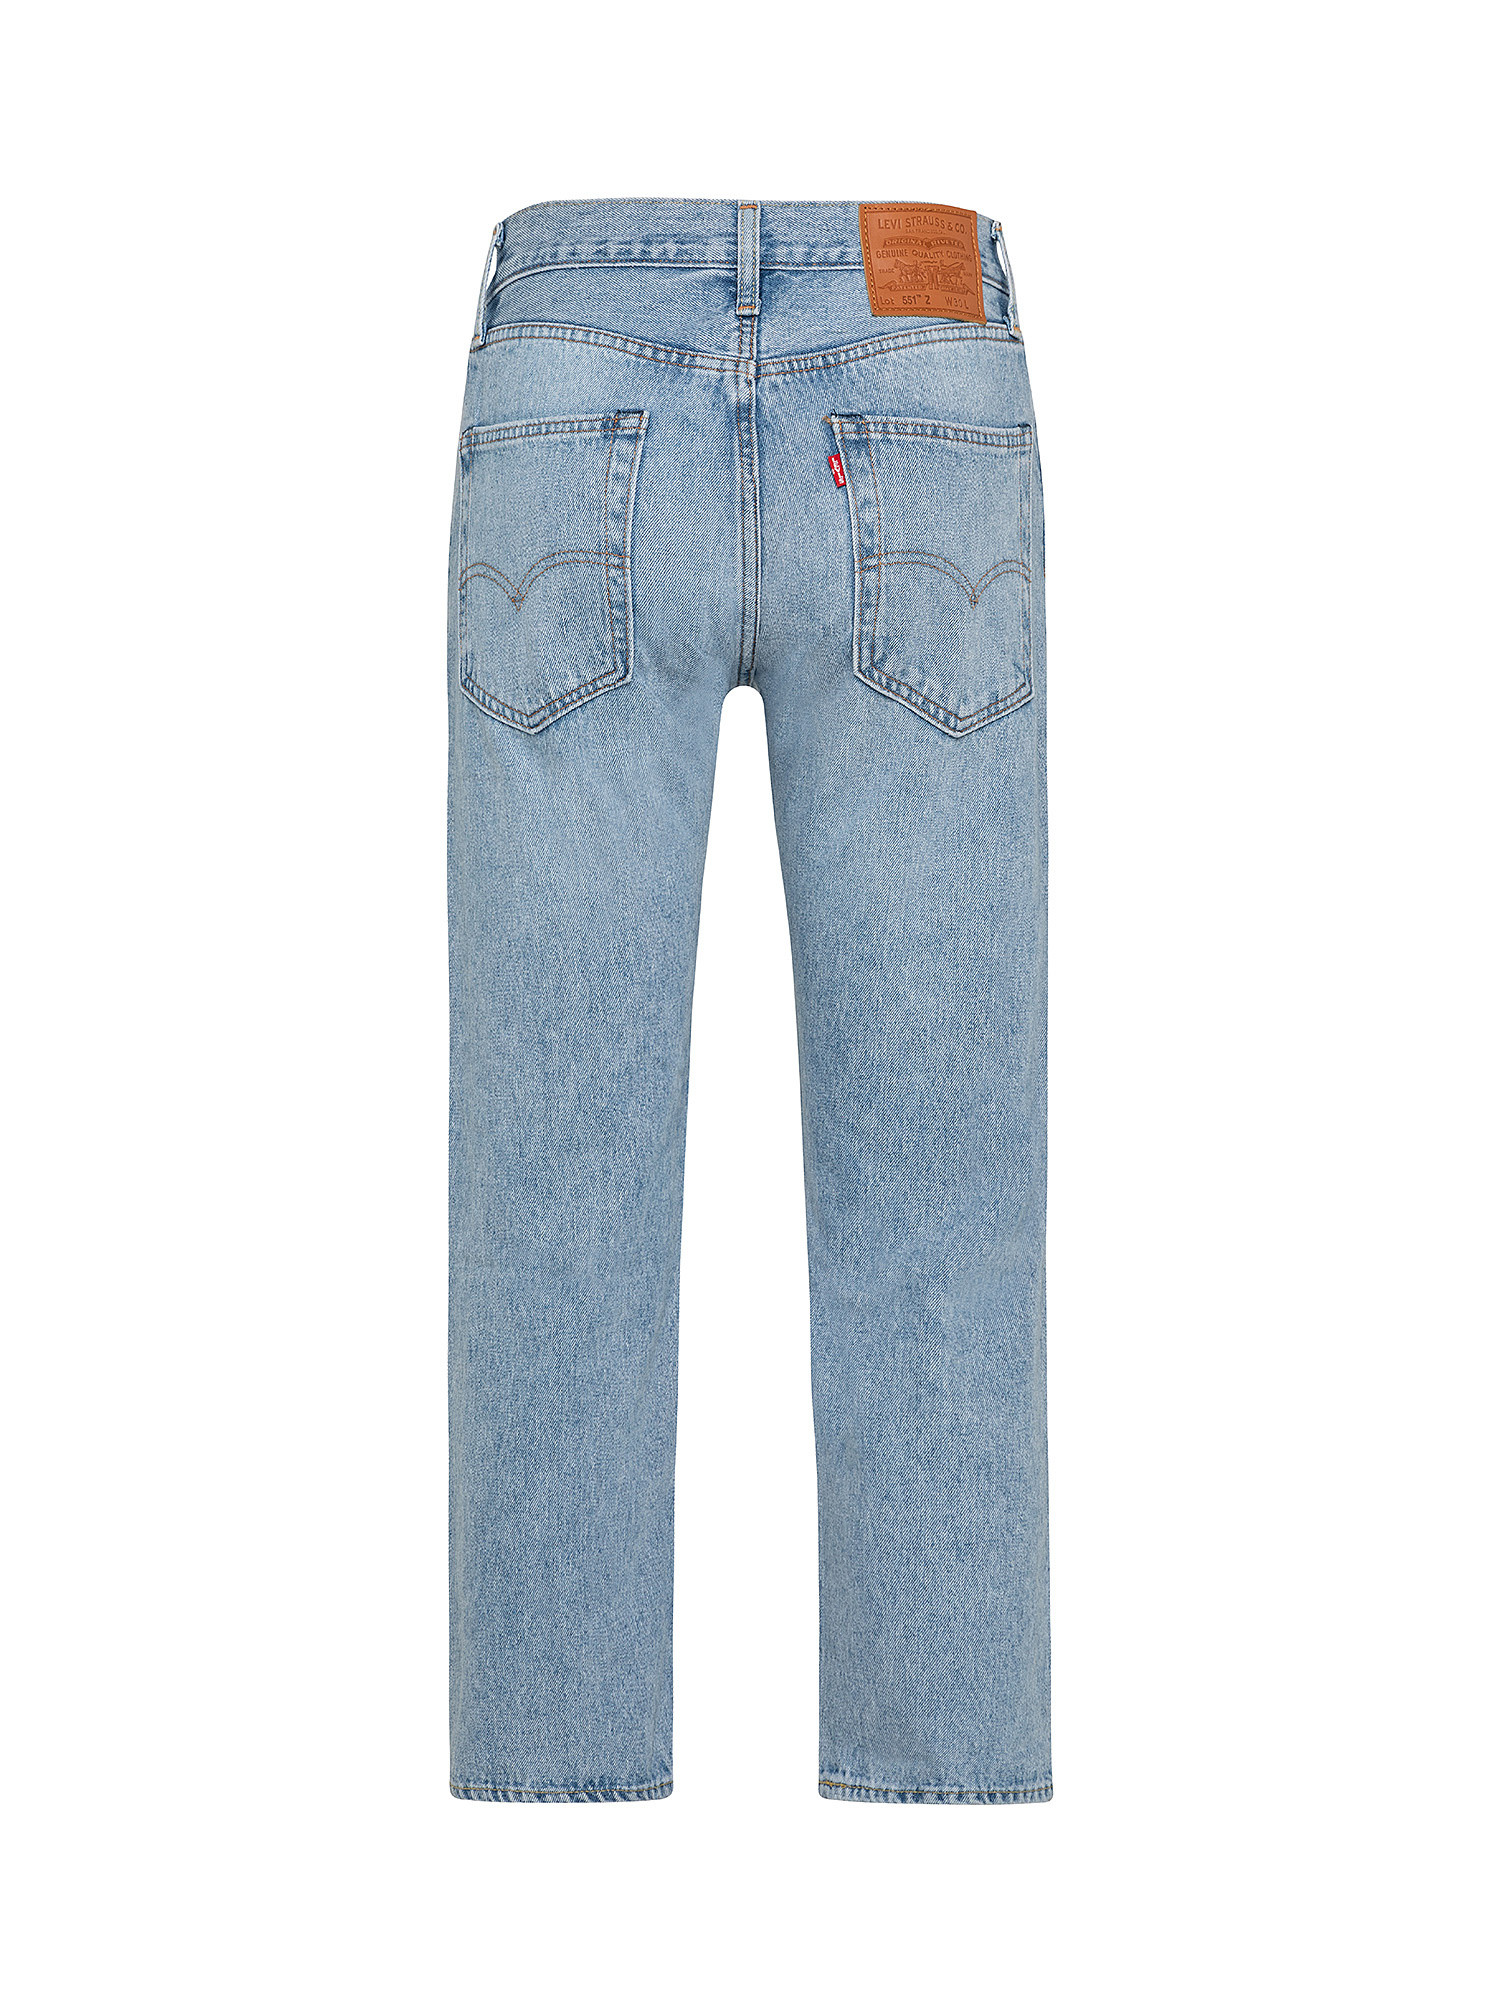 Jeans cinque tasche, Blu, large image number 1